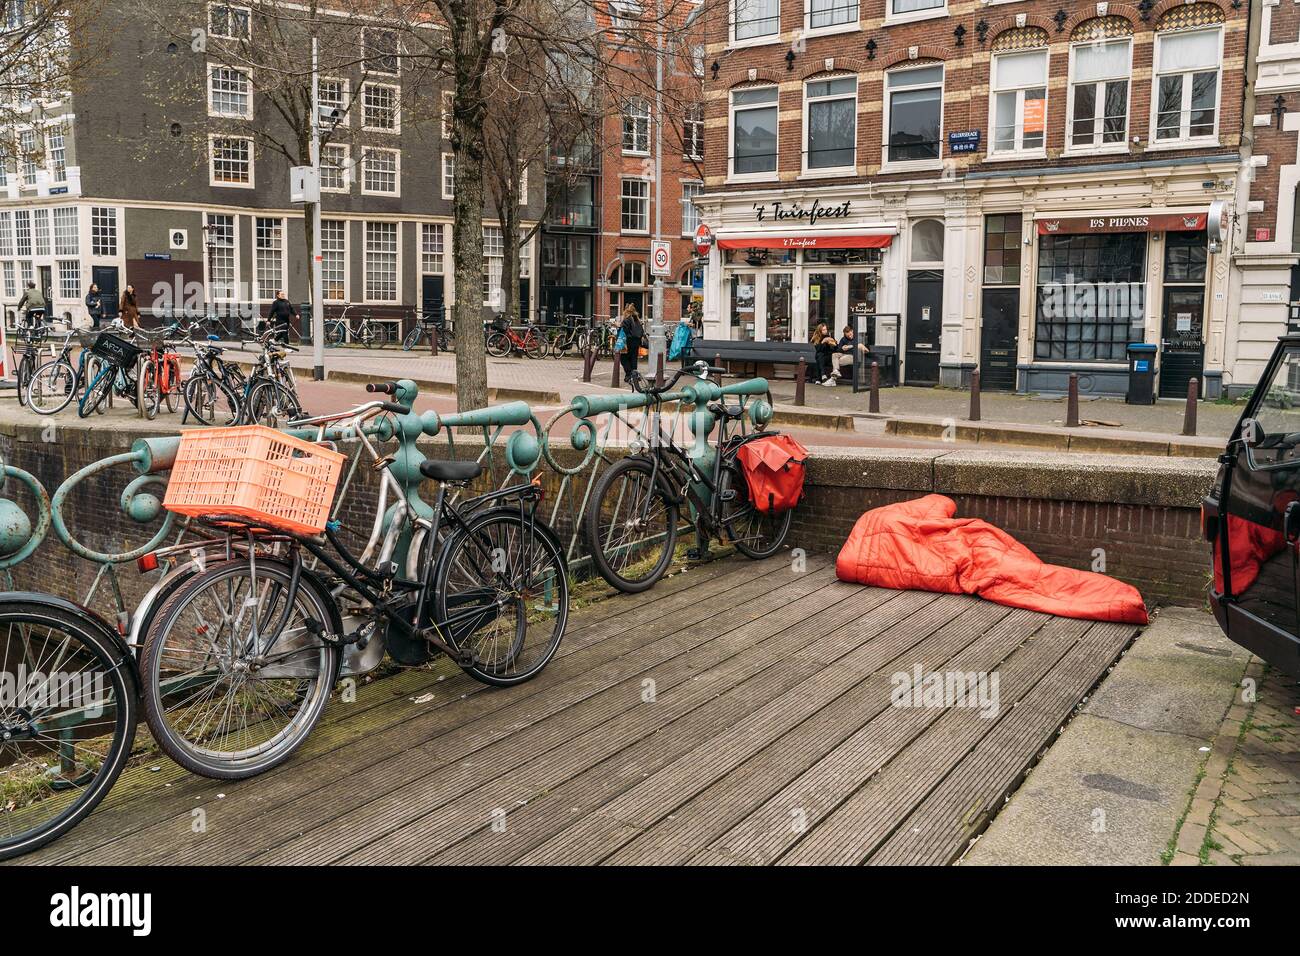 Amsterdam, Netherlands - March 2020 : Homeless man sleeps under red blanket in center of European city. Stock Photo